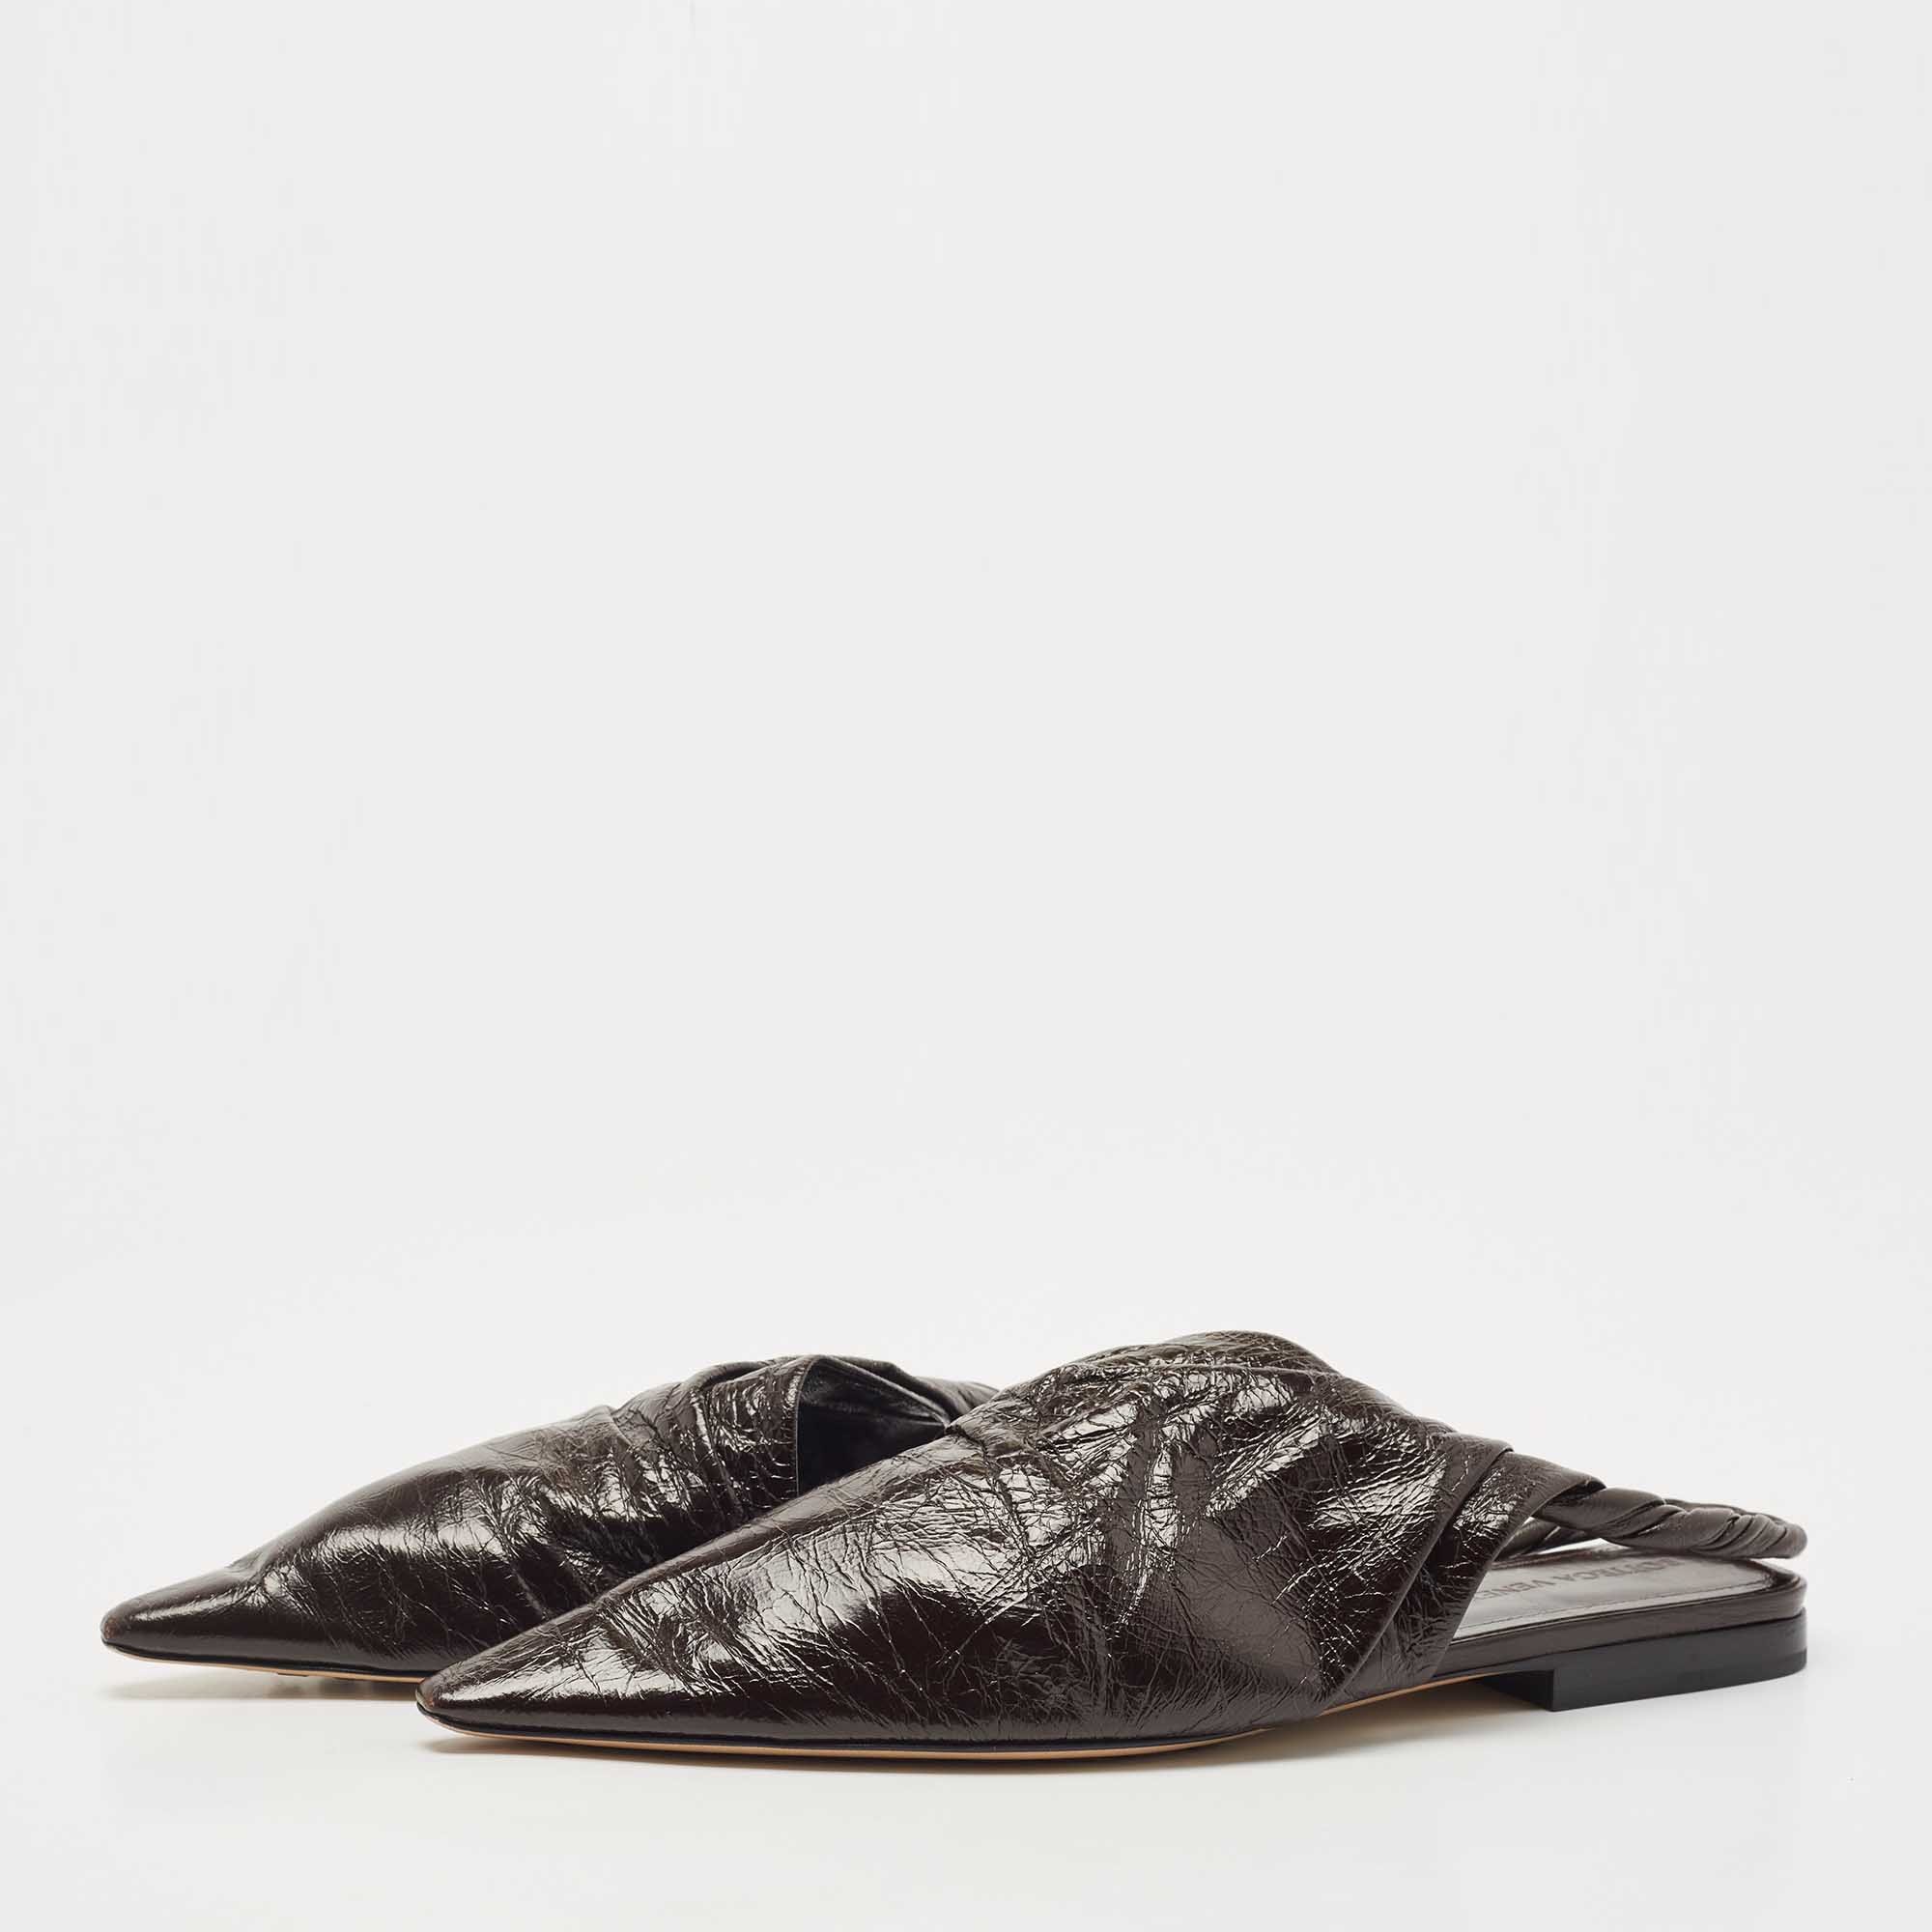 

Bottega Veneta Dark Brown Leather Pointed Toe Slingback Flats Size